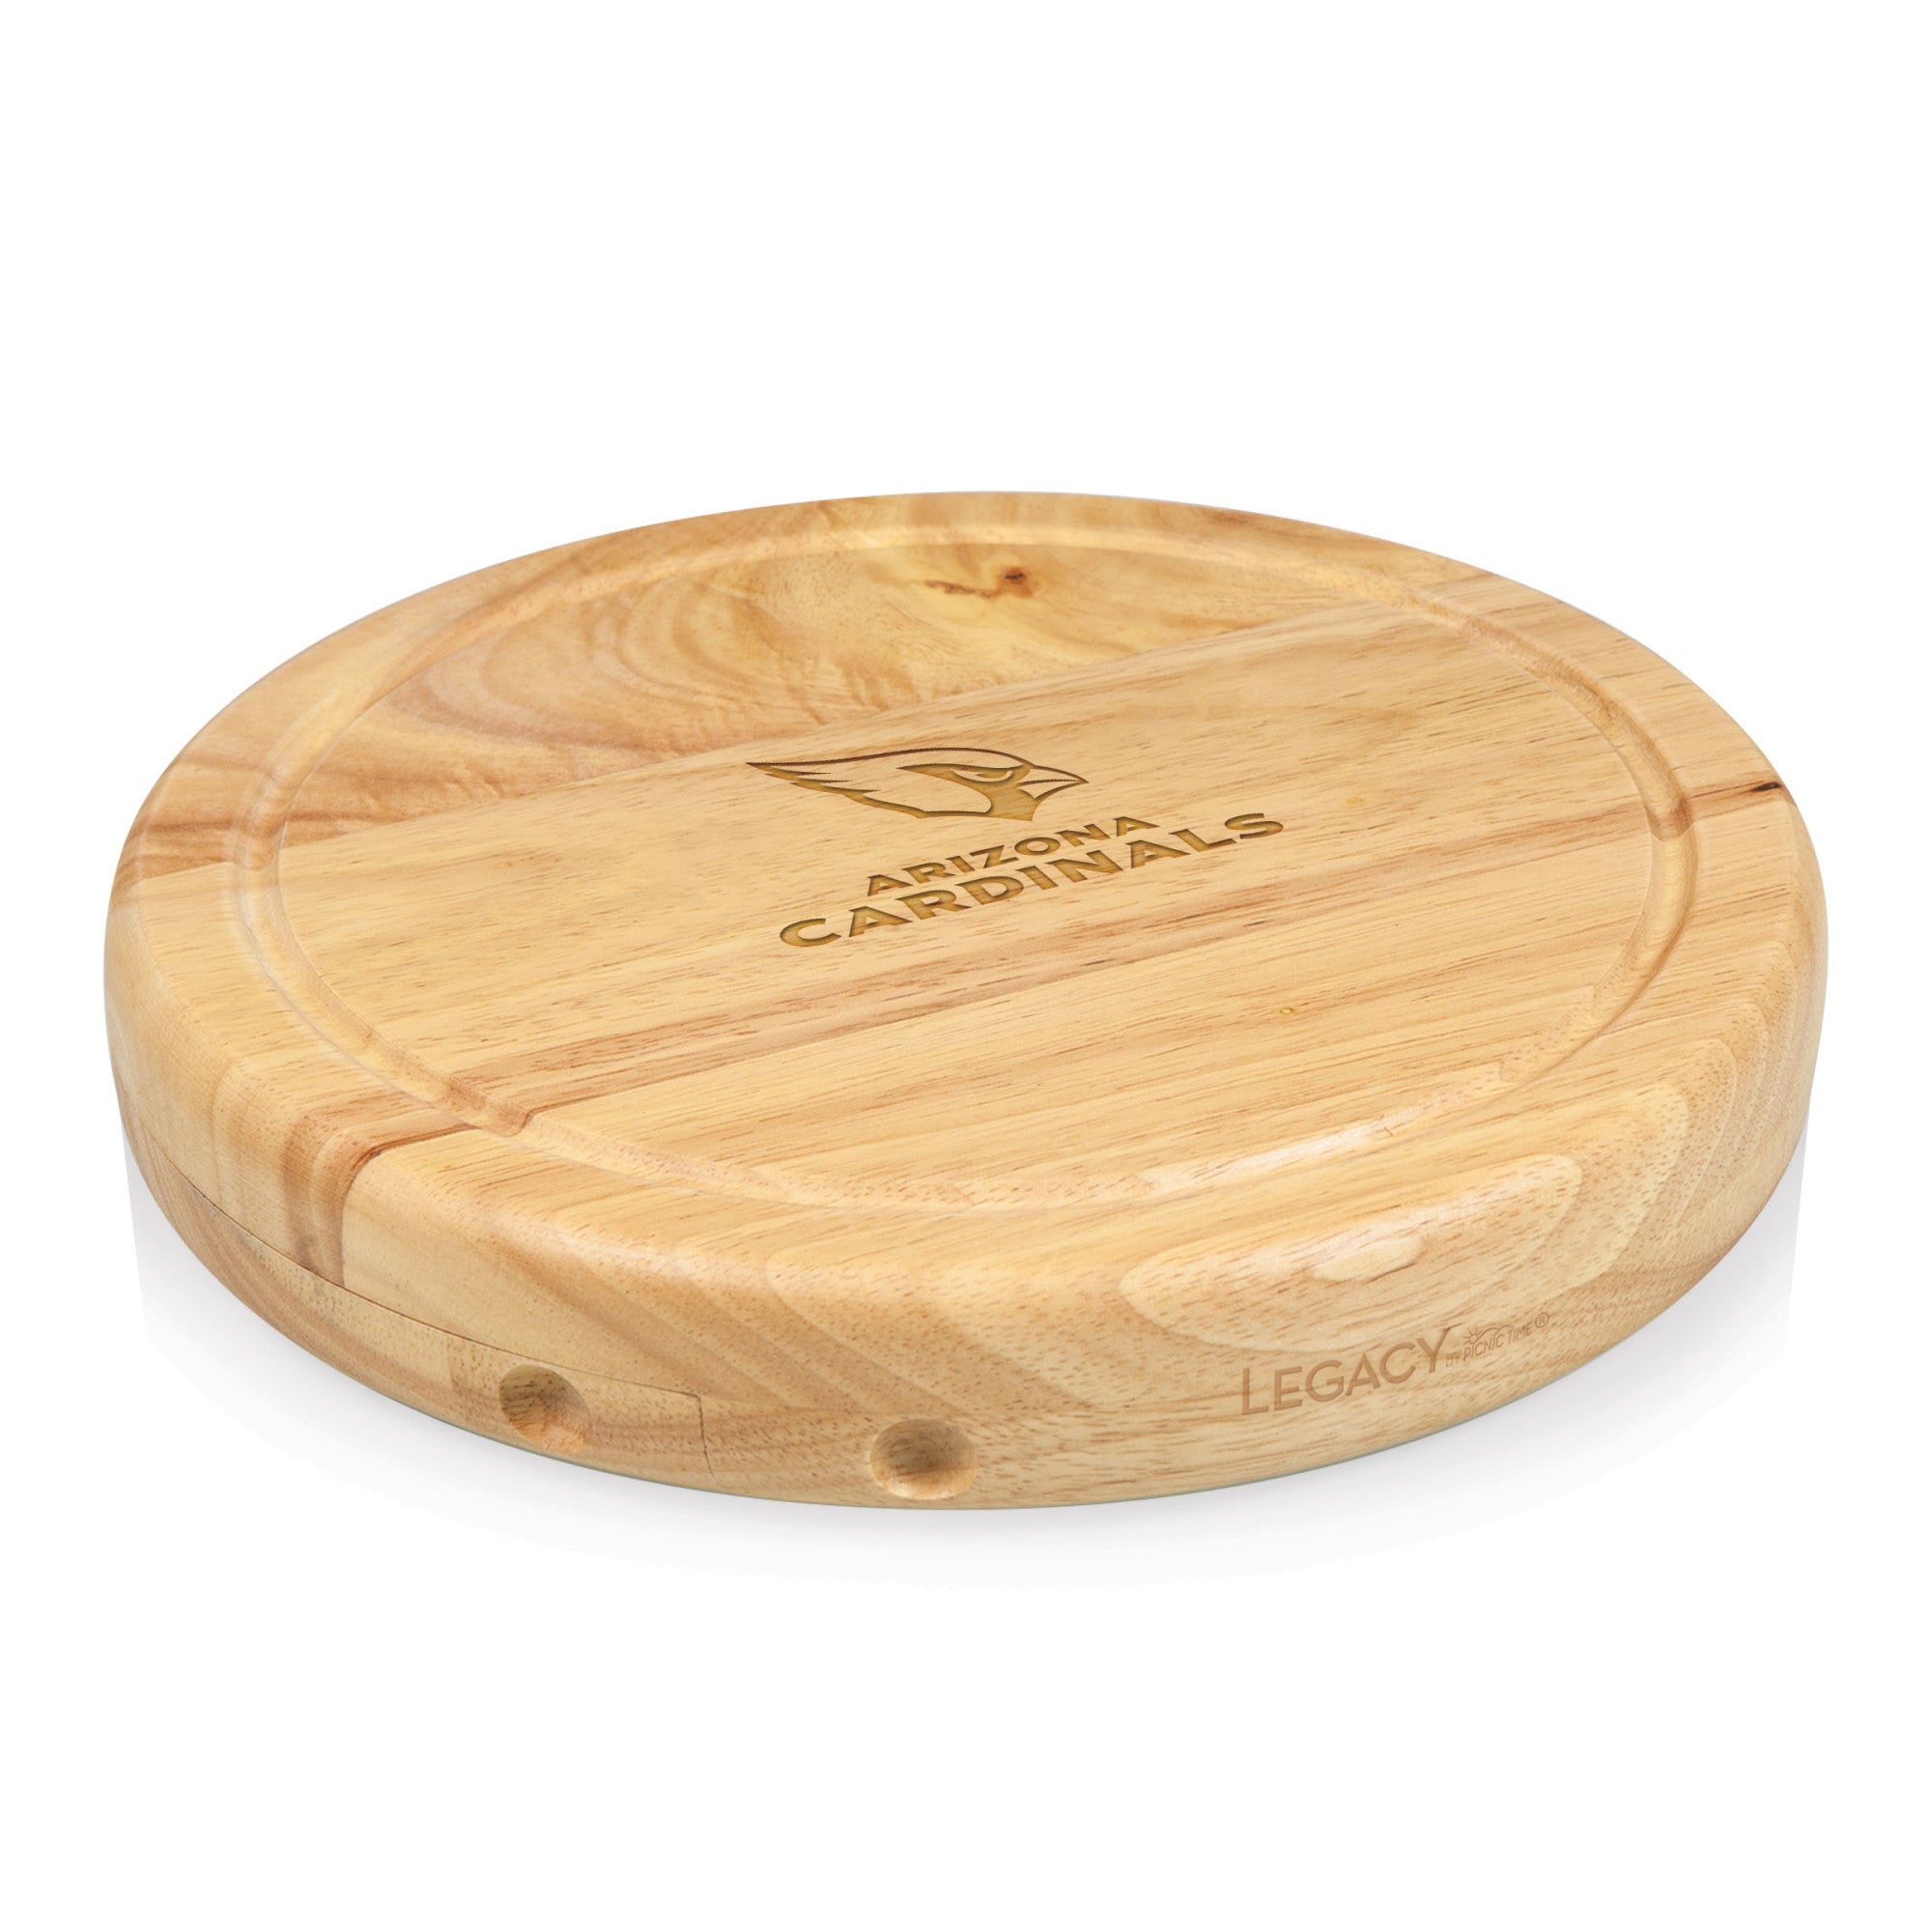 Picnic Time - Arizona cardinals - circo cheese cutting board & tools set, (rubberwood)